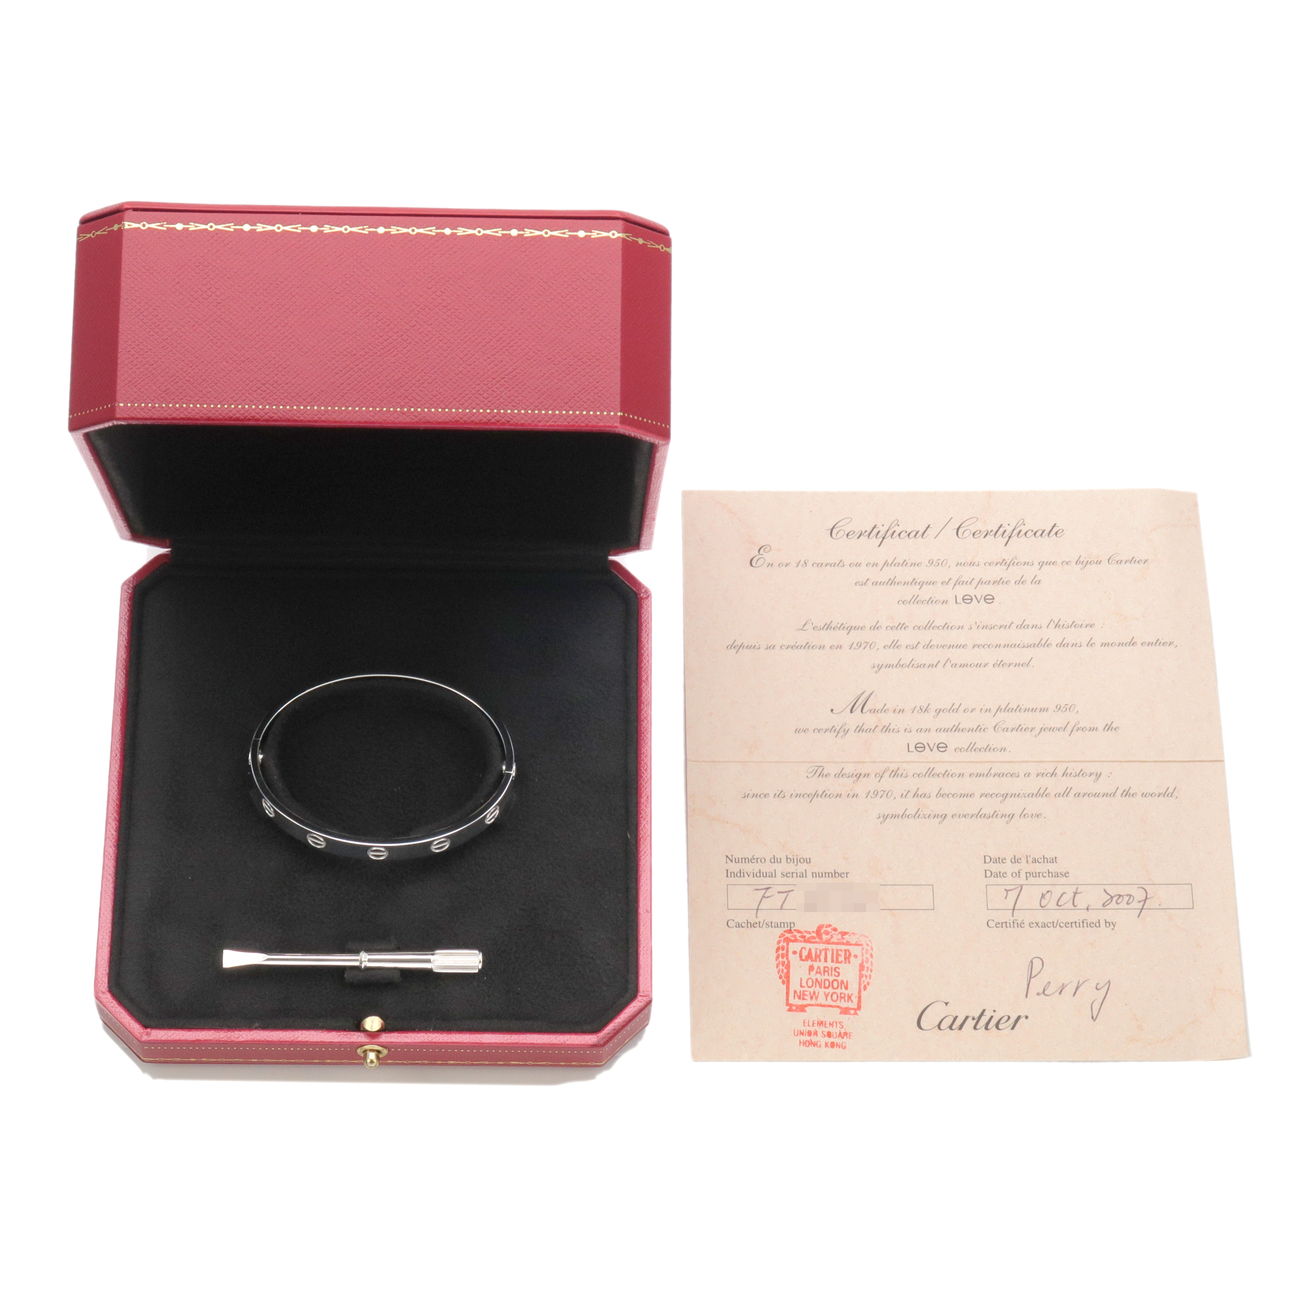 Cartier Love Bracelet Bangle K18 750WG Size #16 White Gold